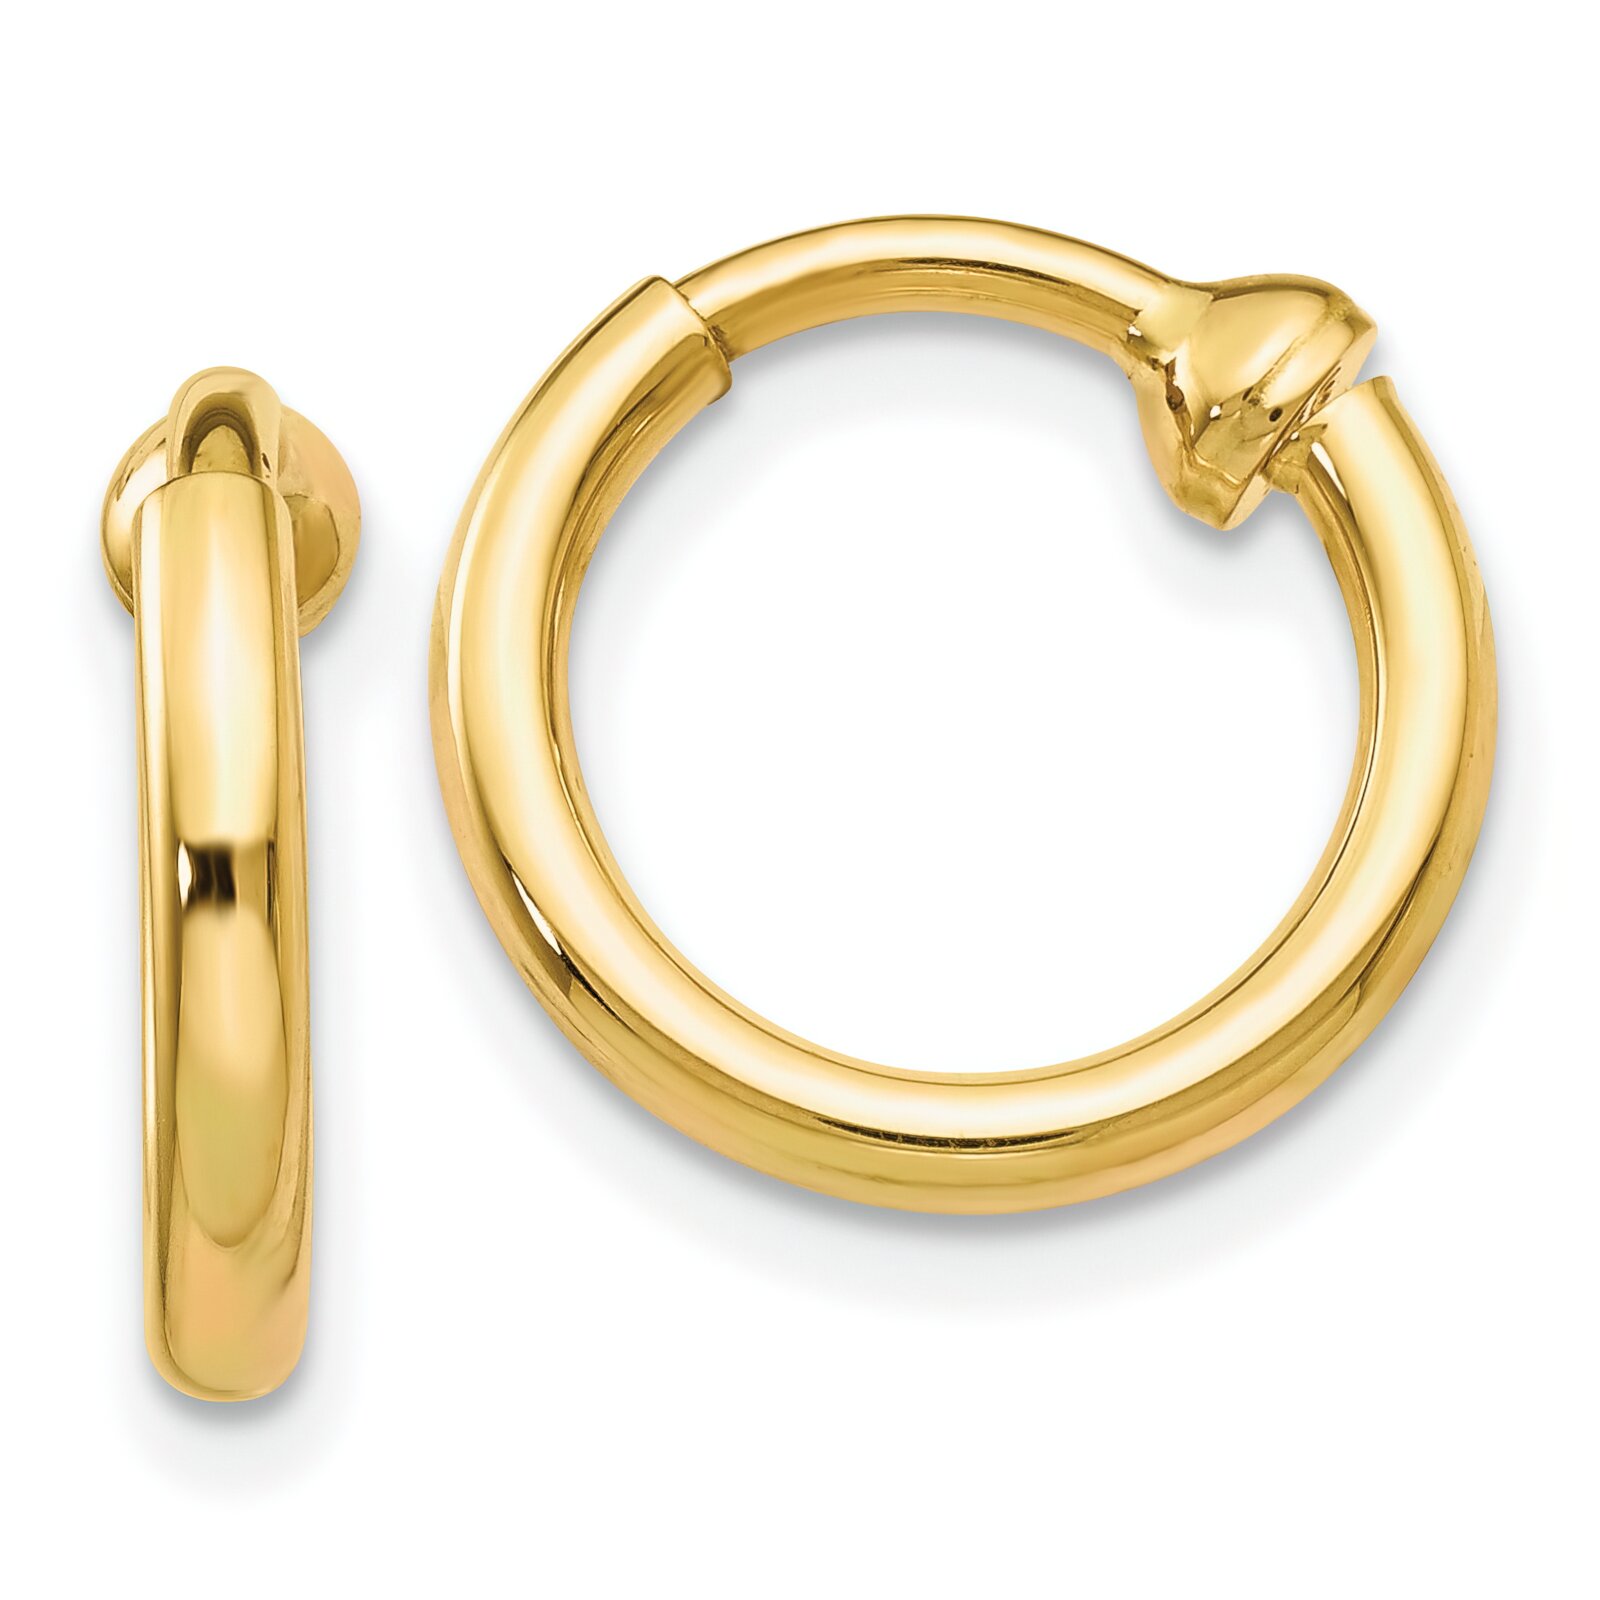 Findingking 14K Yellow Gold Clip On Hoop Earrings Jewelry